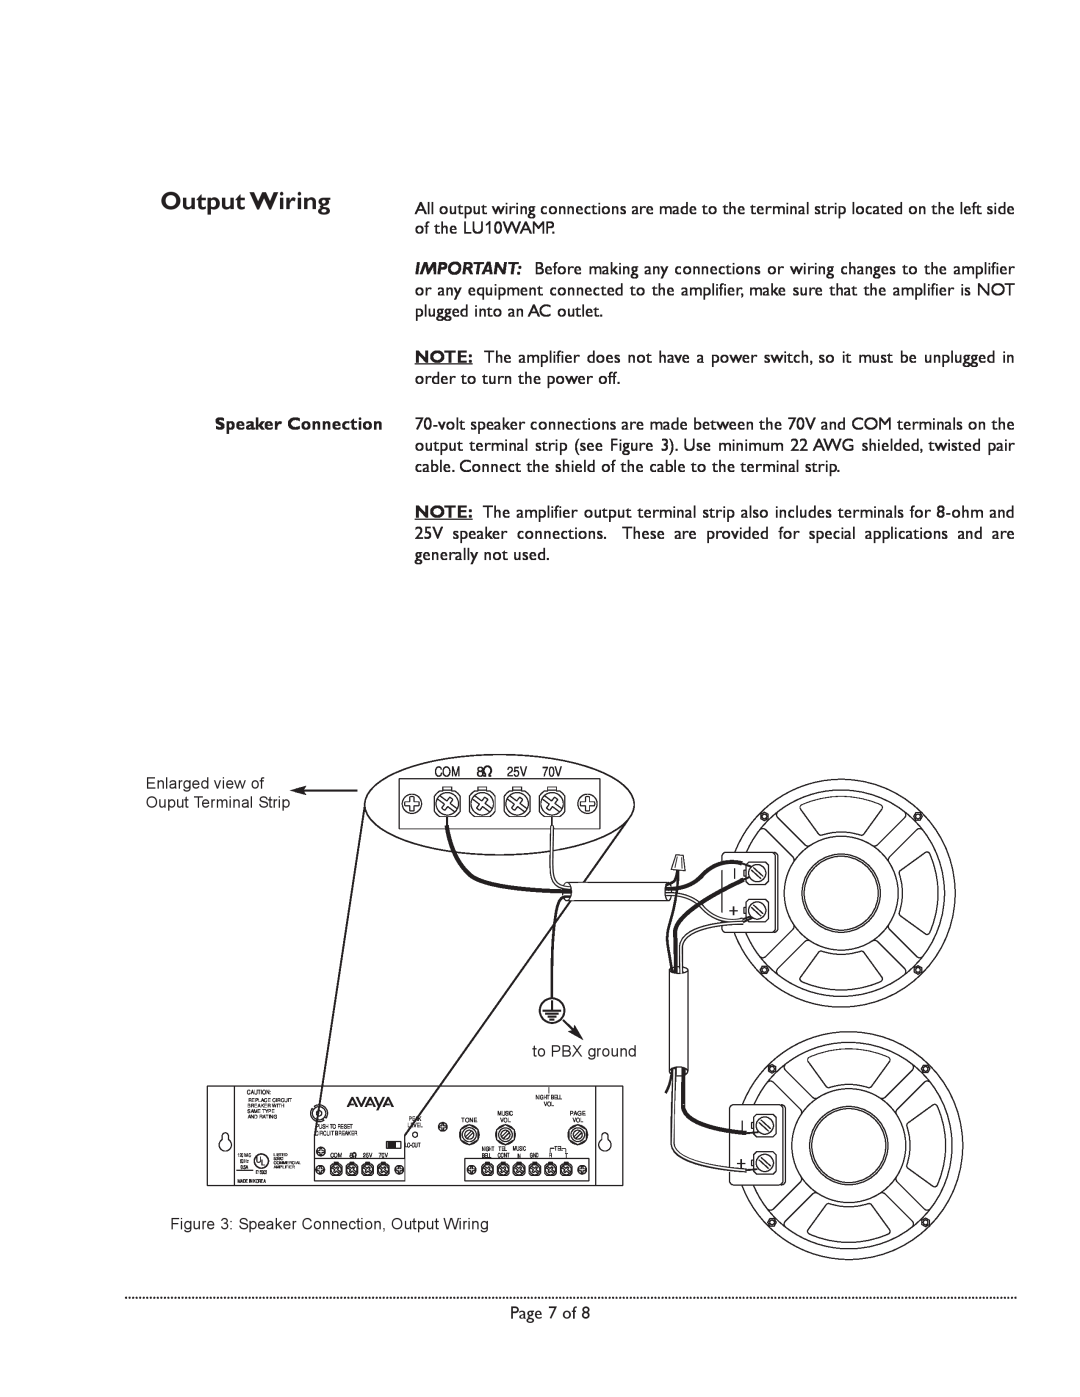 Avaya 10-Watt manual Output Wiring, Speaker Connection 